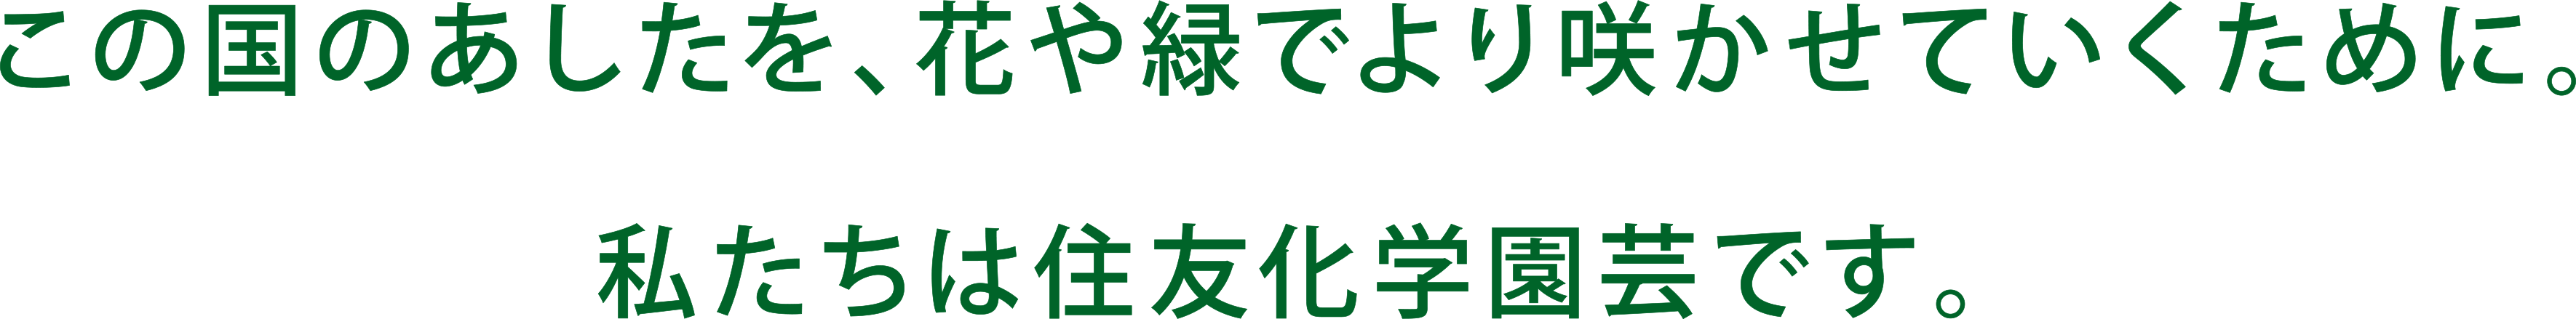 slogan logo